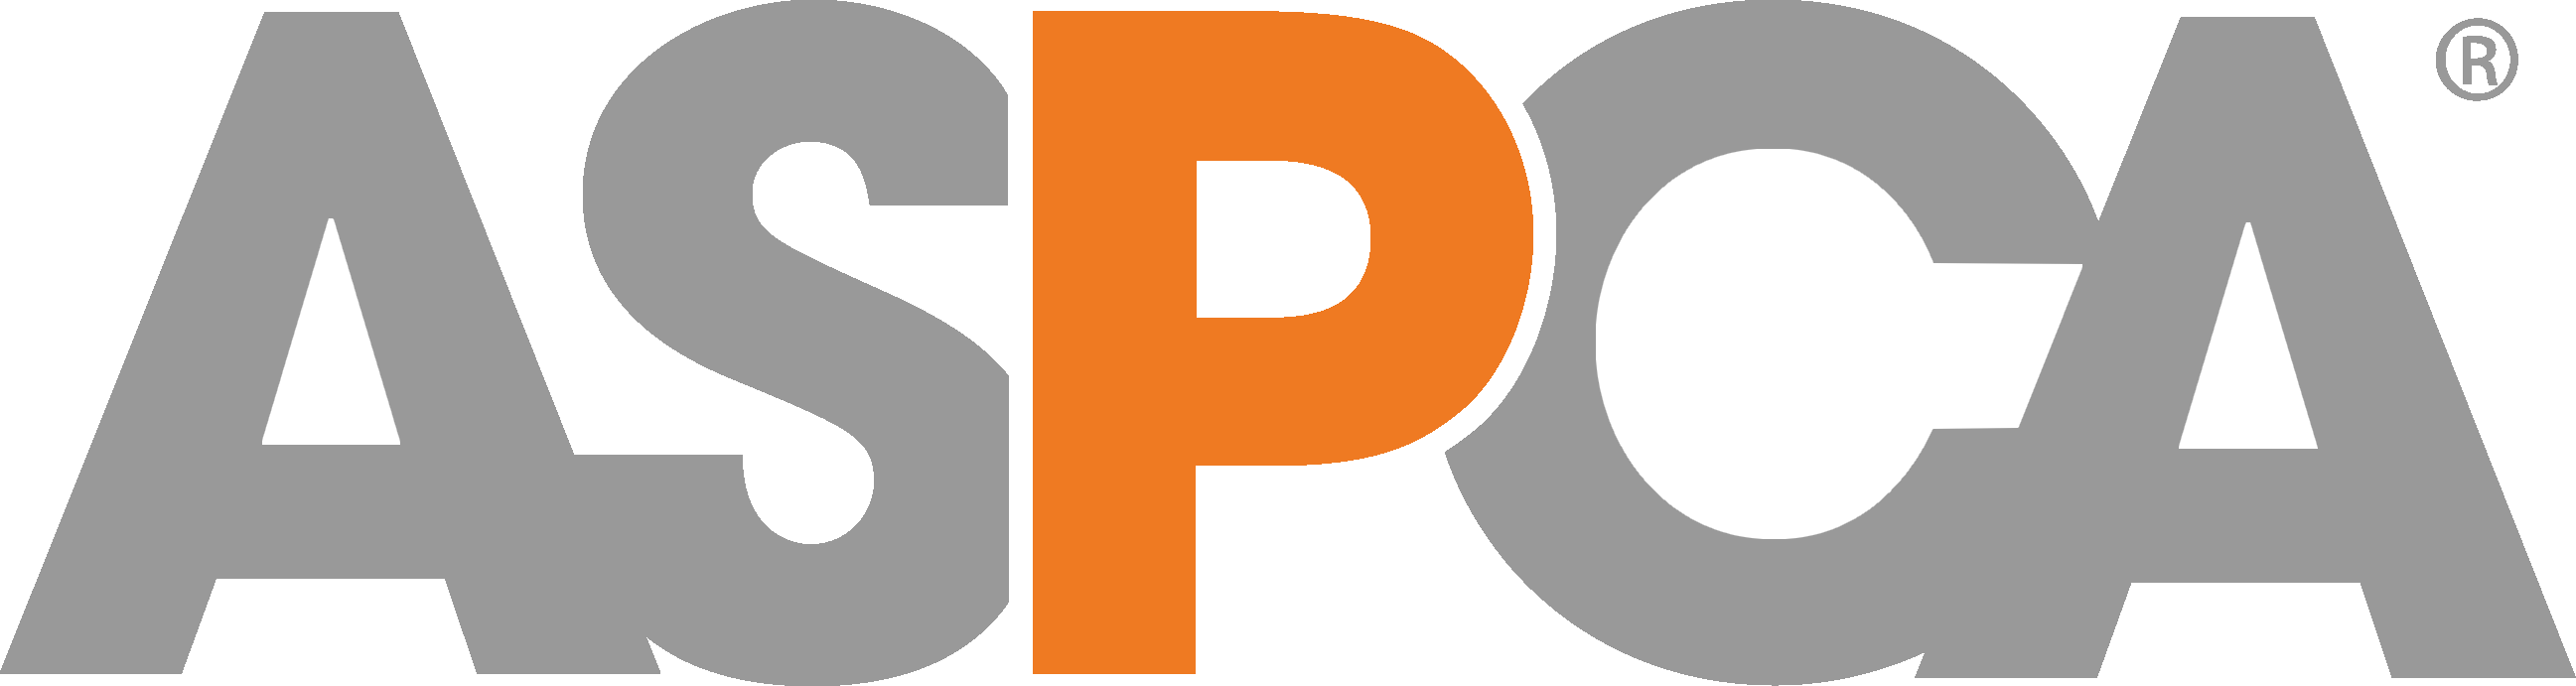 ASPCA Logo png